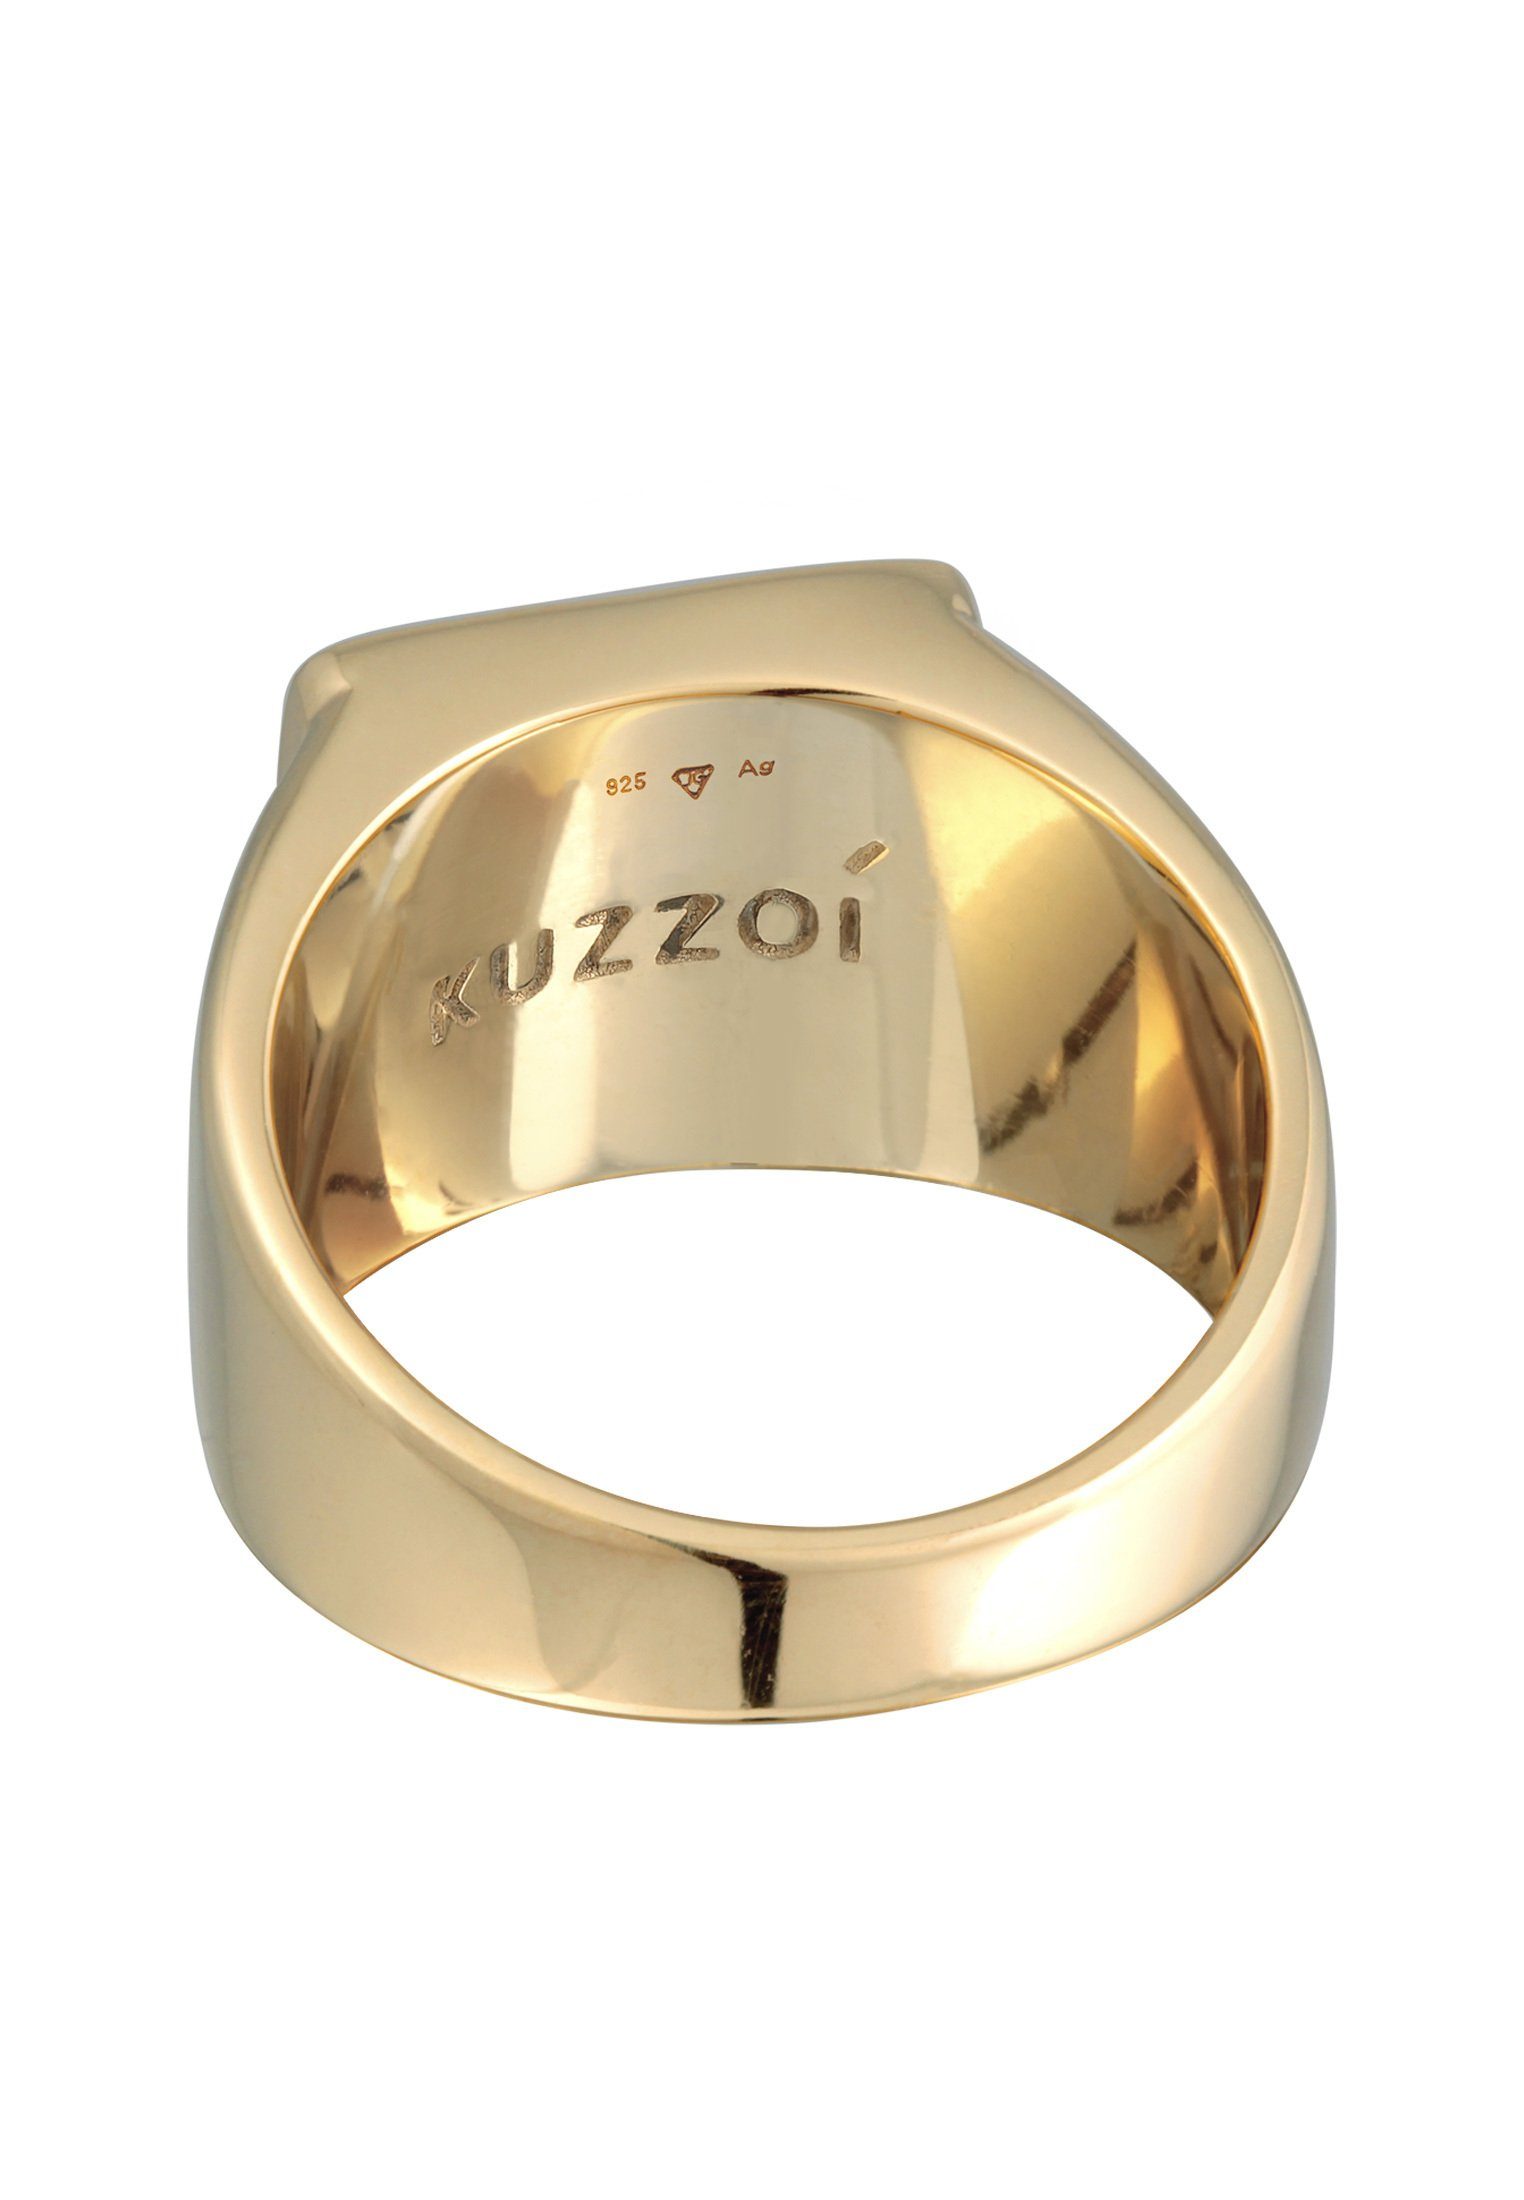 Symbol Kuzzoi 925 Anker Siegelring Herren Silber Oxidiert Siegelring Gold